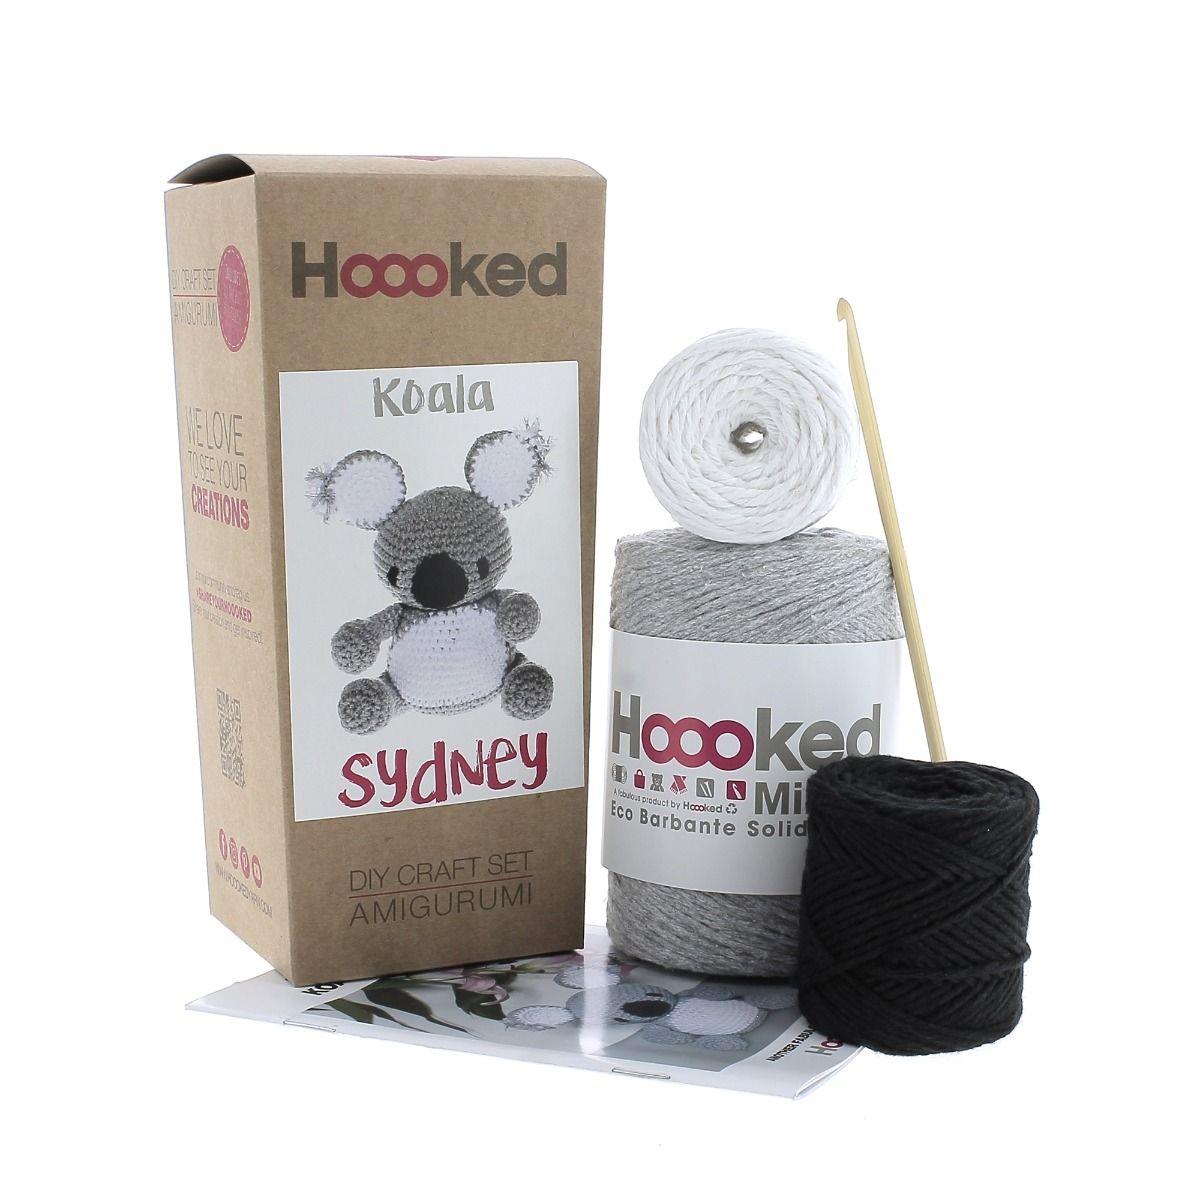 [Hoooked] PAK142 Eco Barbante Milano Gris Cotton Koala Sydney Crochet Amigurumi Kit